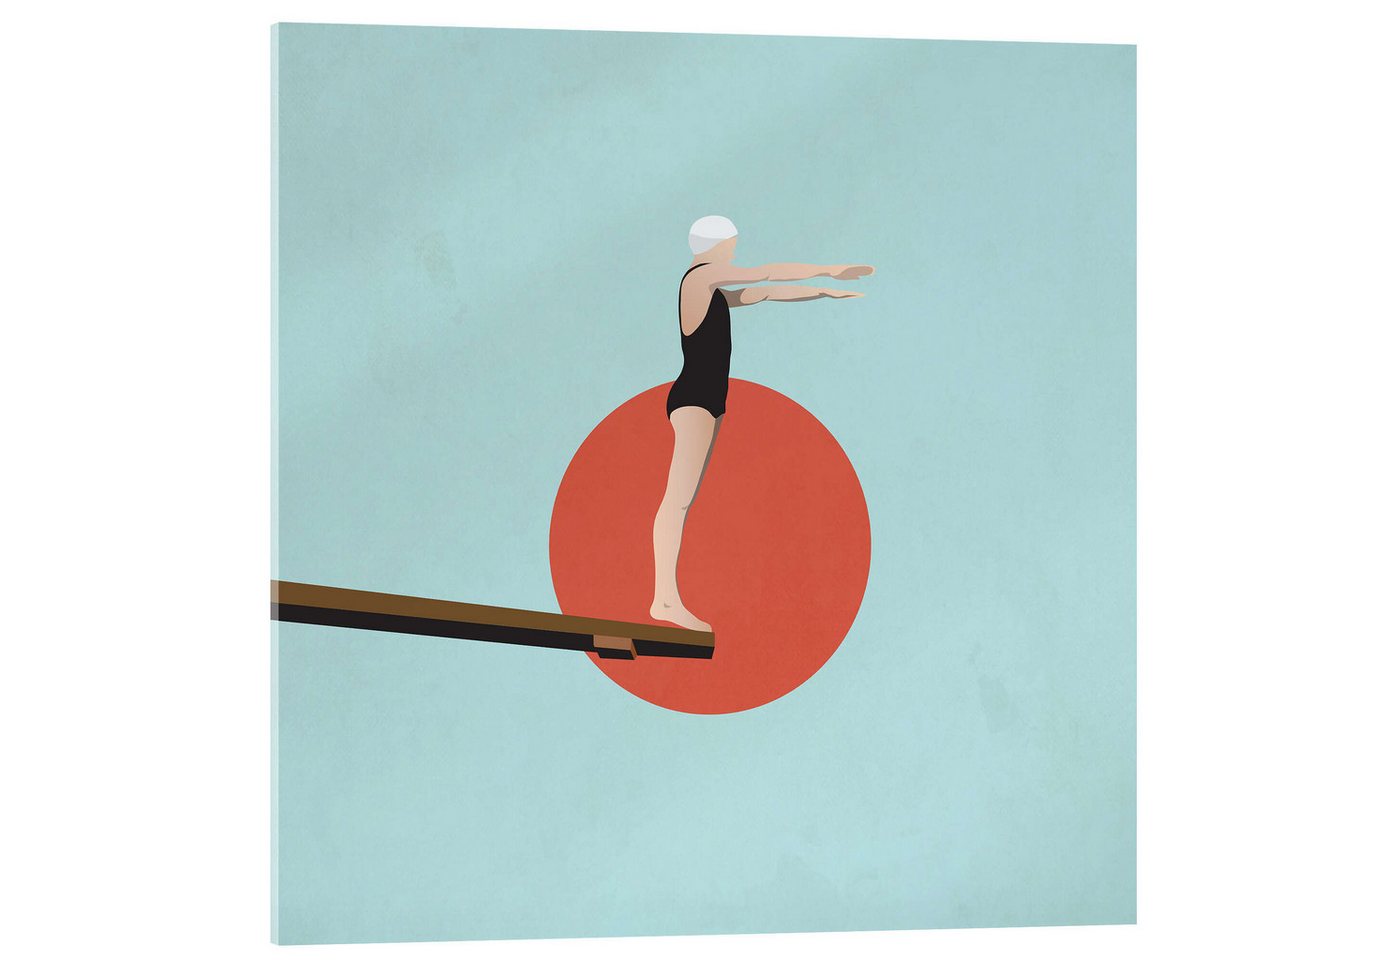 Posterlounge Acrylglasbild Layla Oz, Sprungbrett, Badezimmer Maritim Illustration von Posterlounge